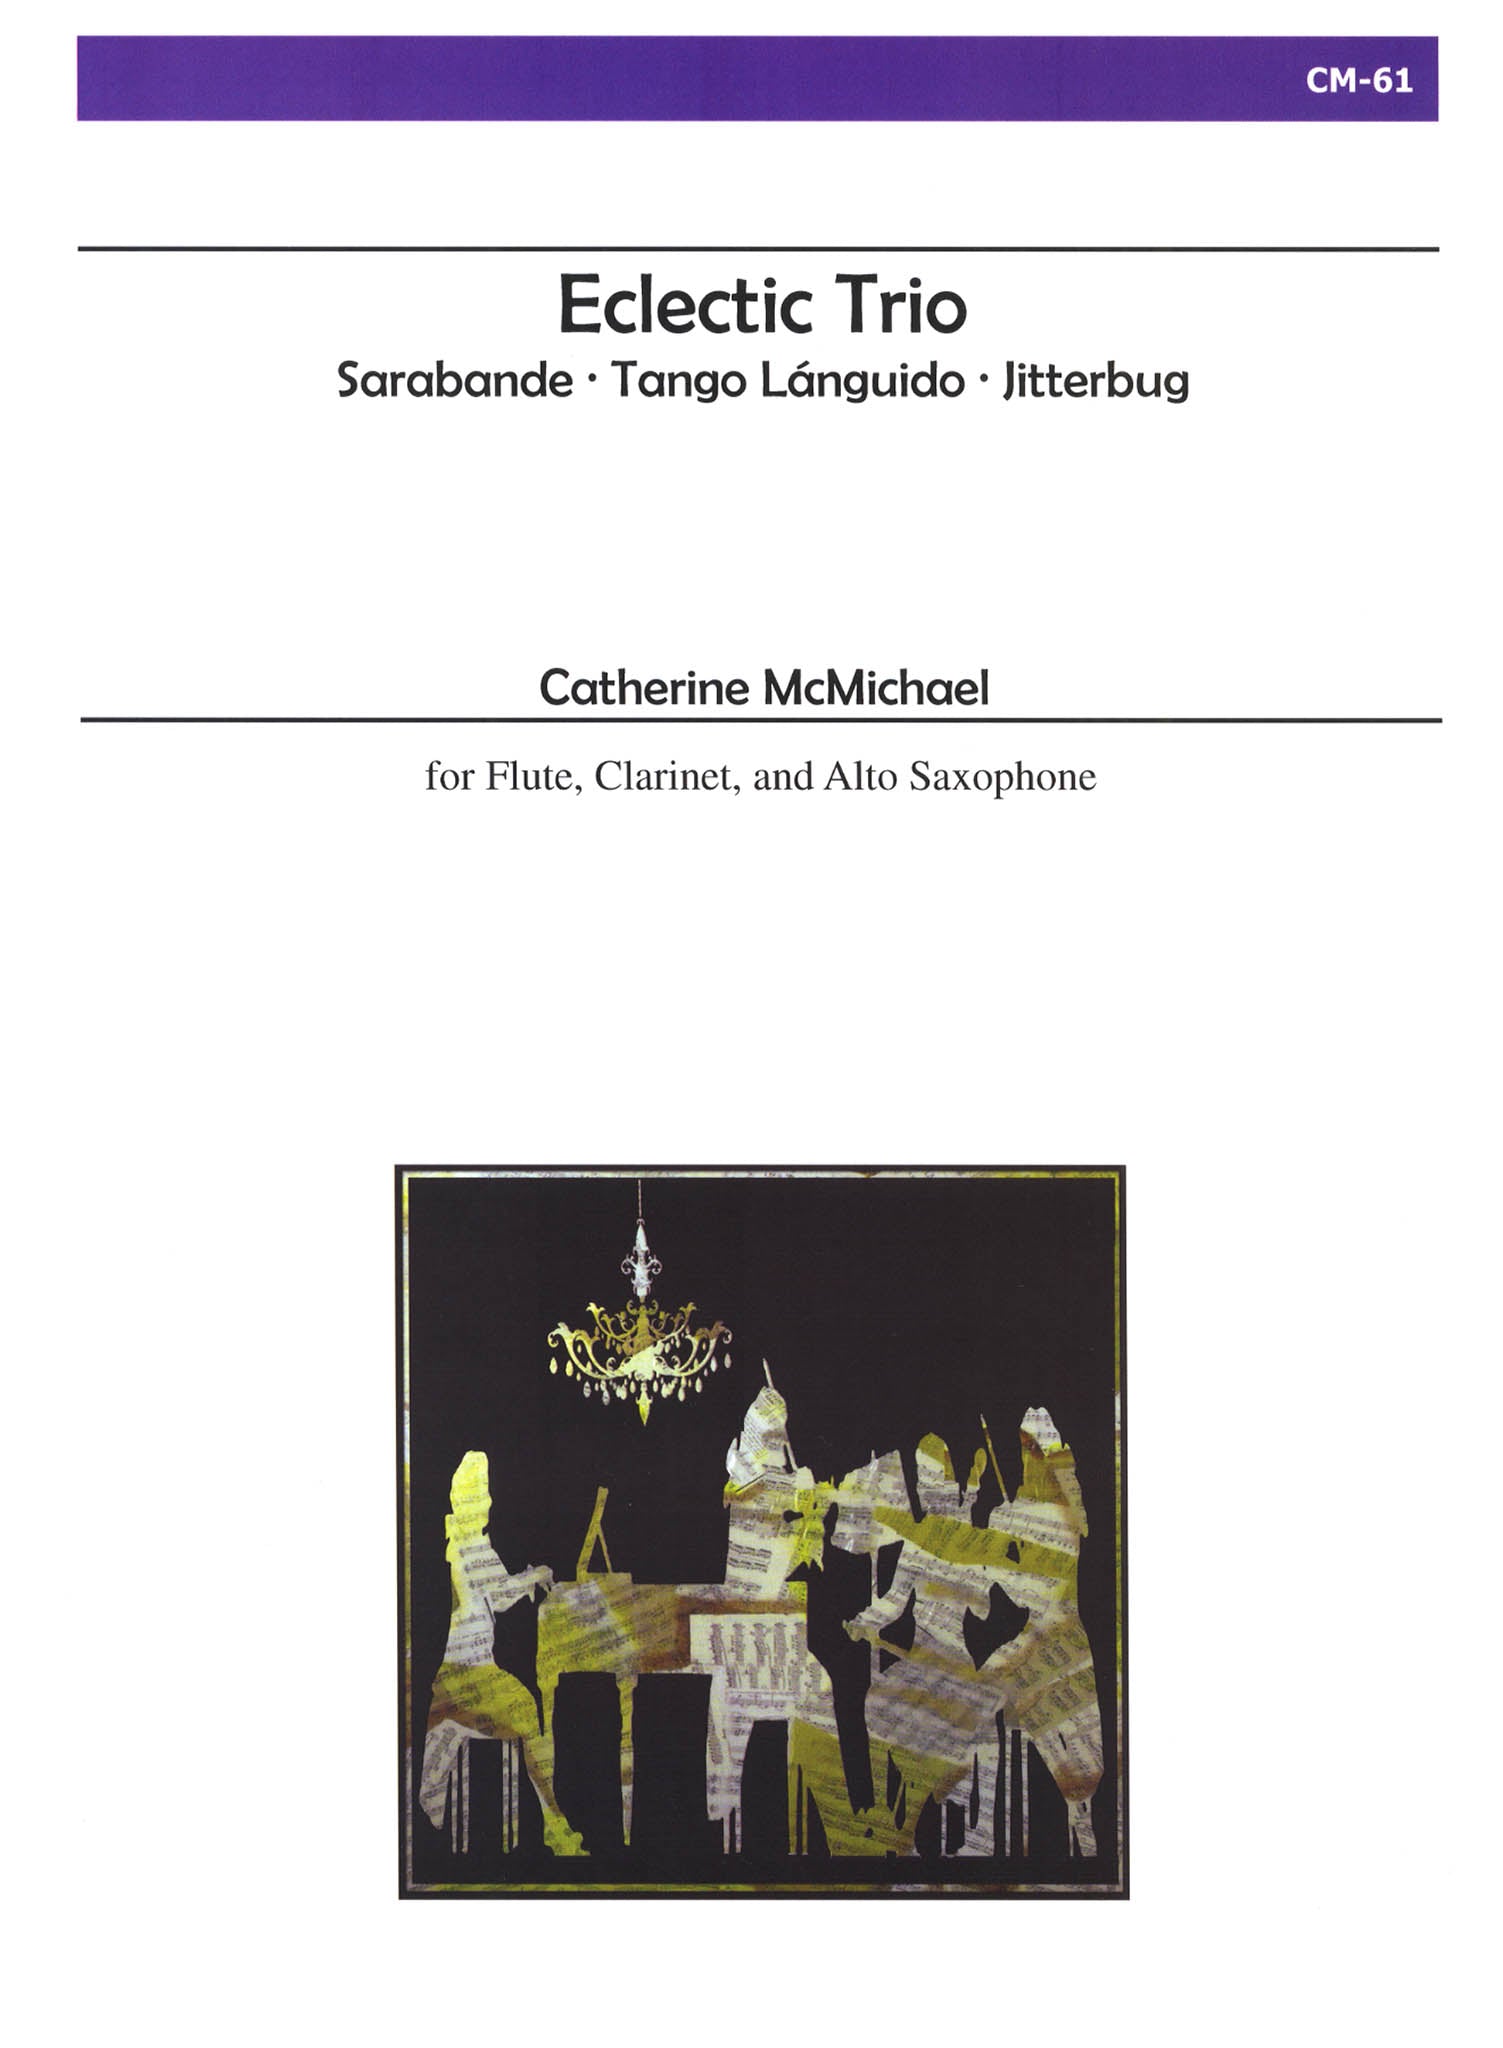 McMichael Eclectic Trio flute clarinet saxophone cover